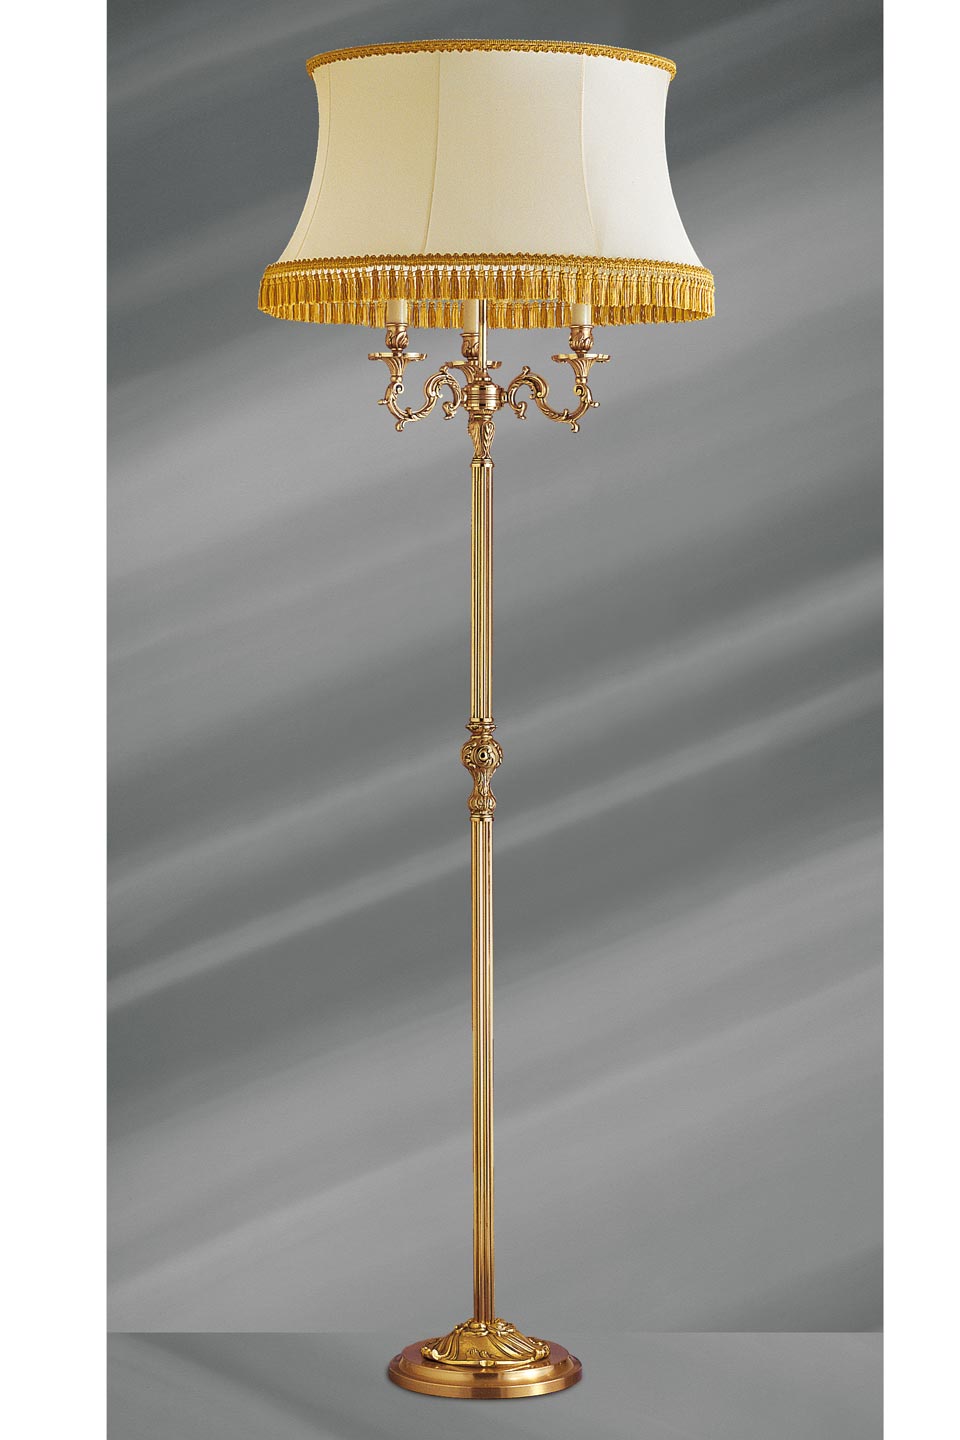 Gilded Louis Xv Floor Lamp Round, Antique Gold Floor Lamp